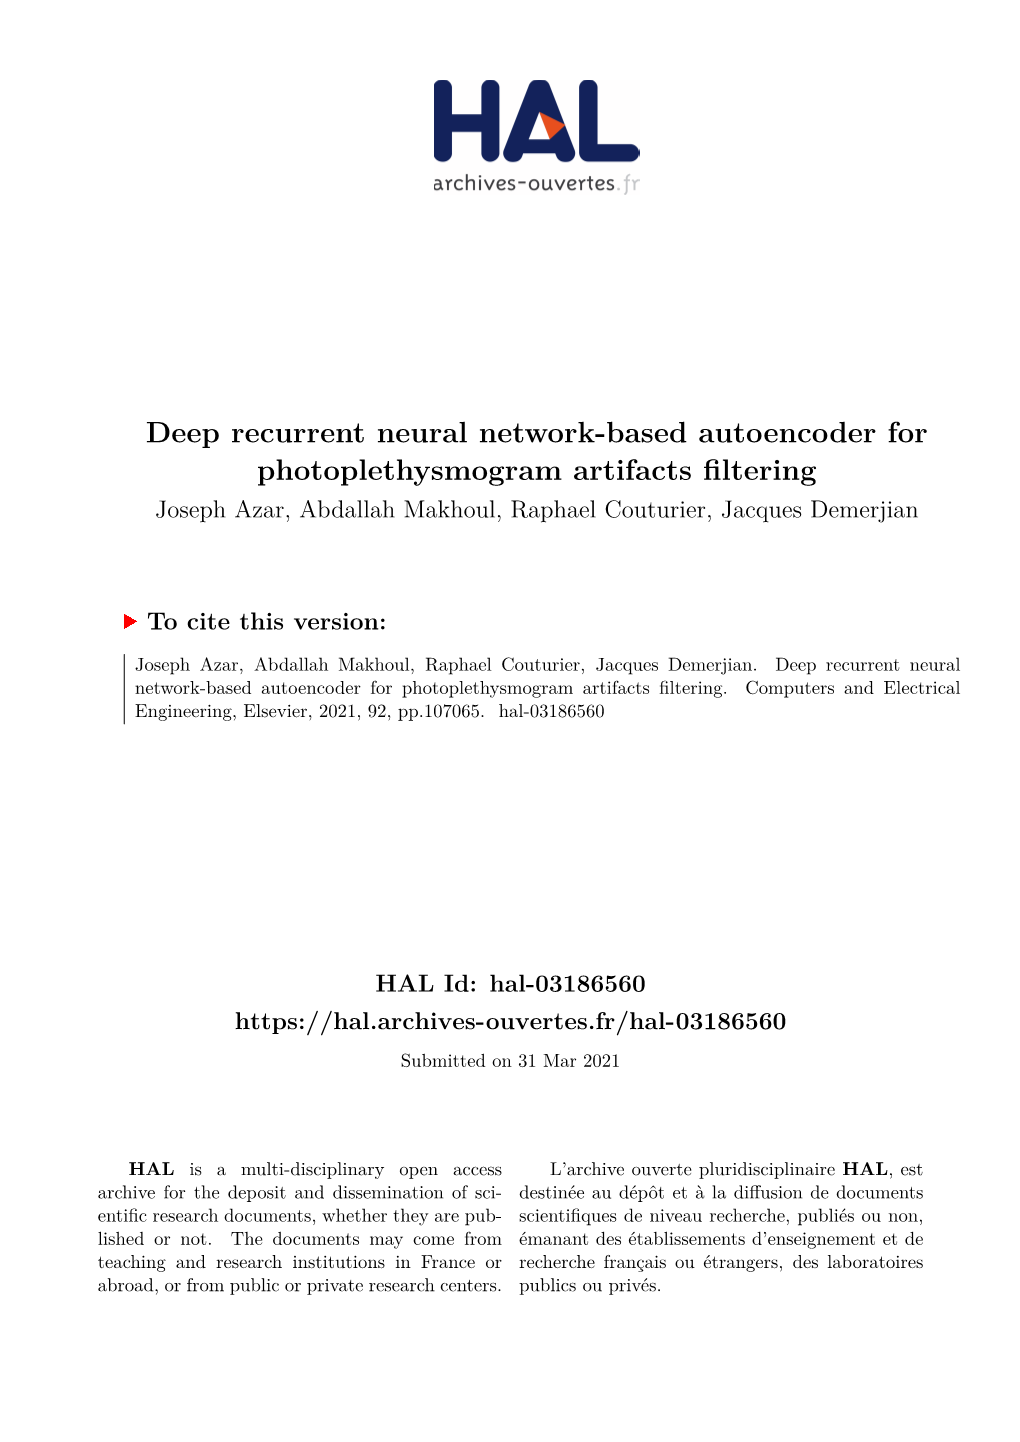 Deep Recurrent Neural Network-Based Autoencoder for Photoplethysmogram Artifacts Filtering Joseph Azar, Abdallah Makhoul, Raphael Couturier, Jacques Demerjian